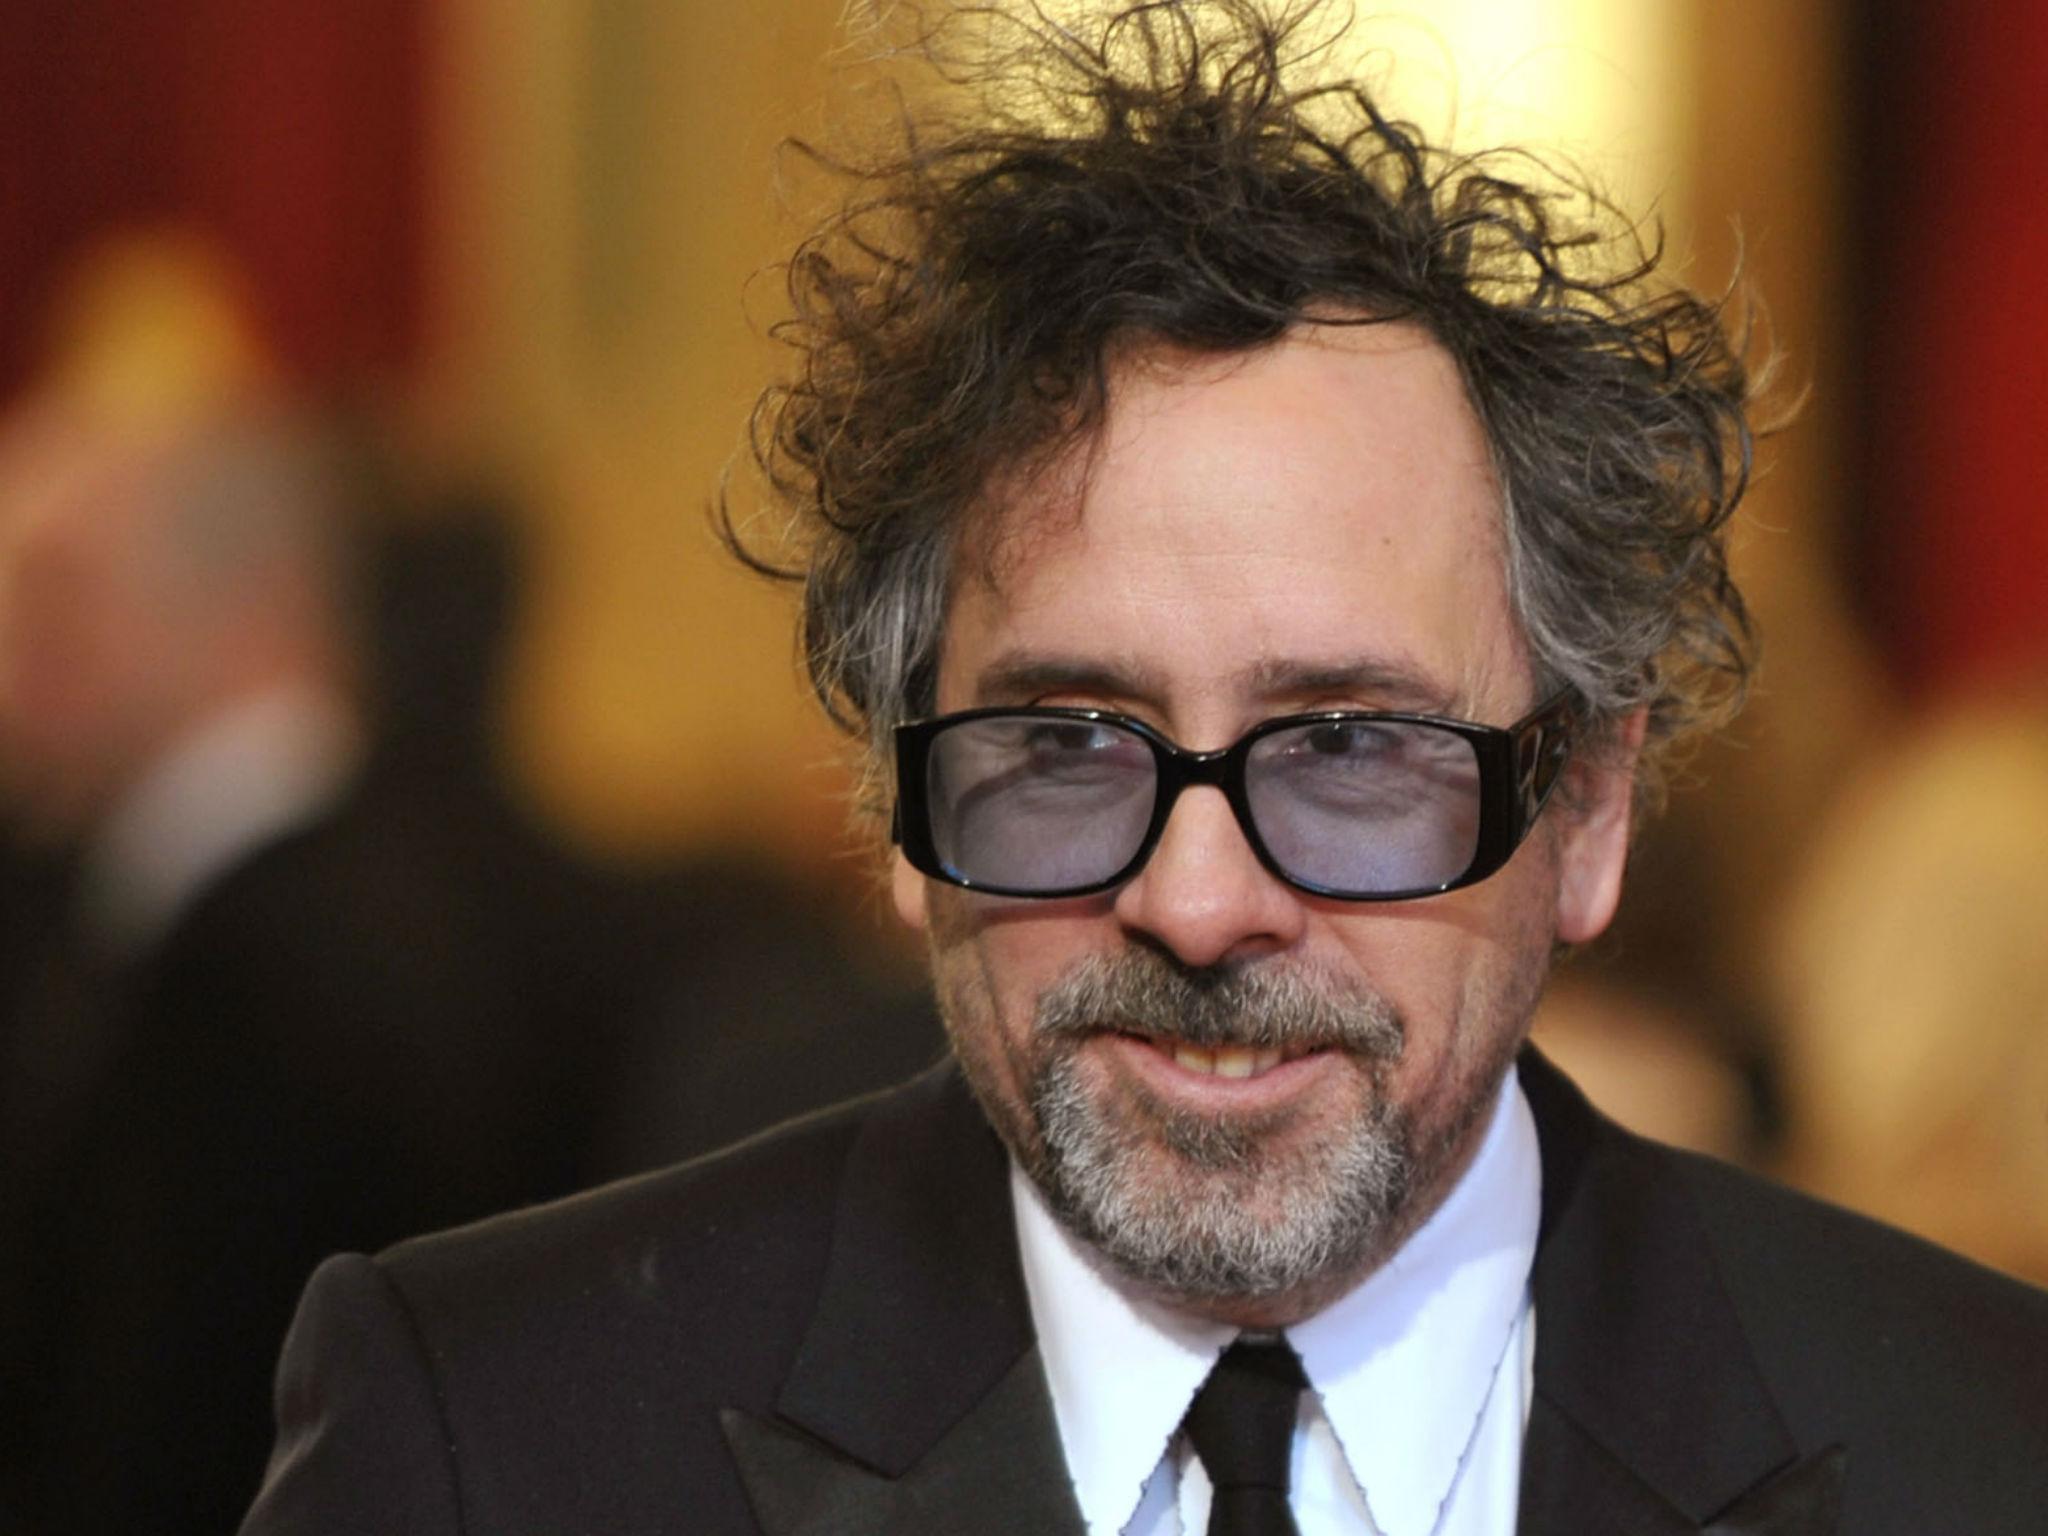 Tim Burton has a reputation for casting Johnny Depp and Helena Bonham Carter in his movies